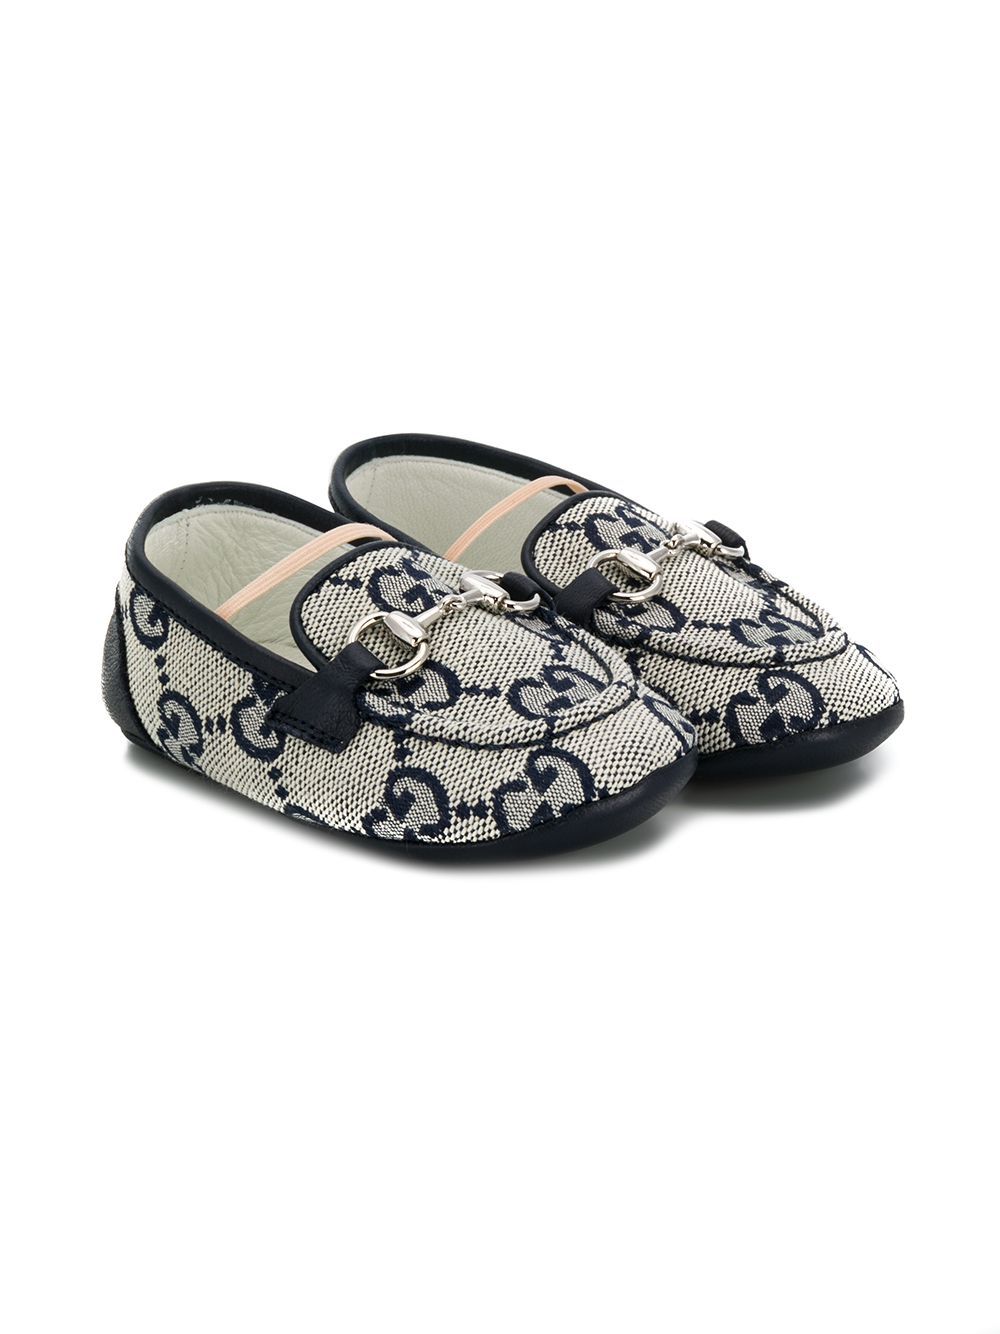 GG print loafers | Farfetch (US)